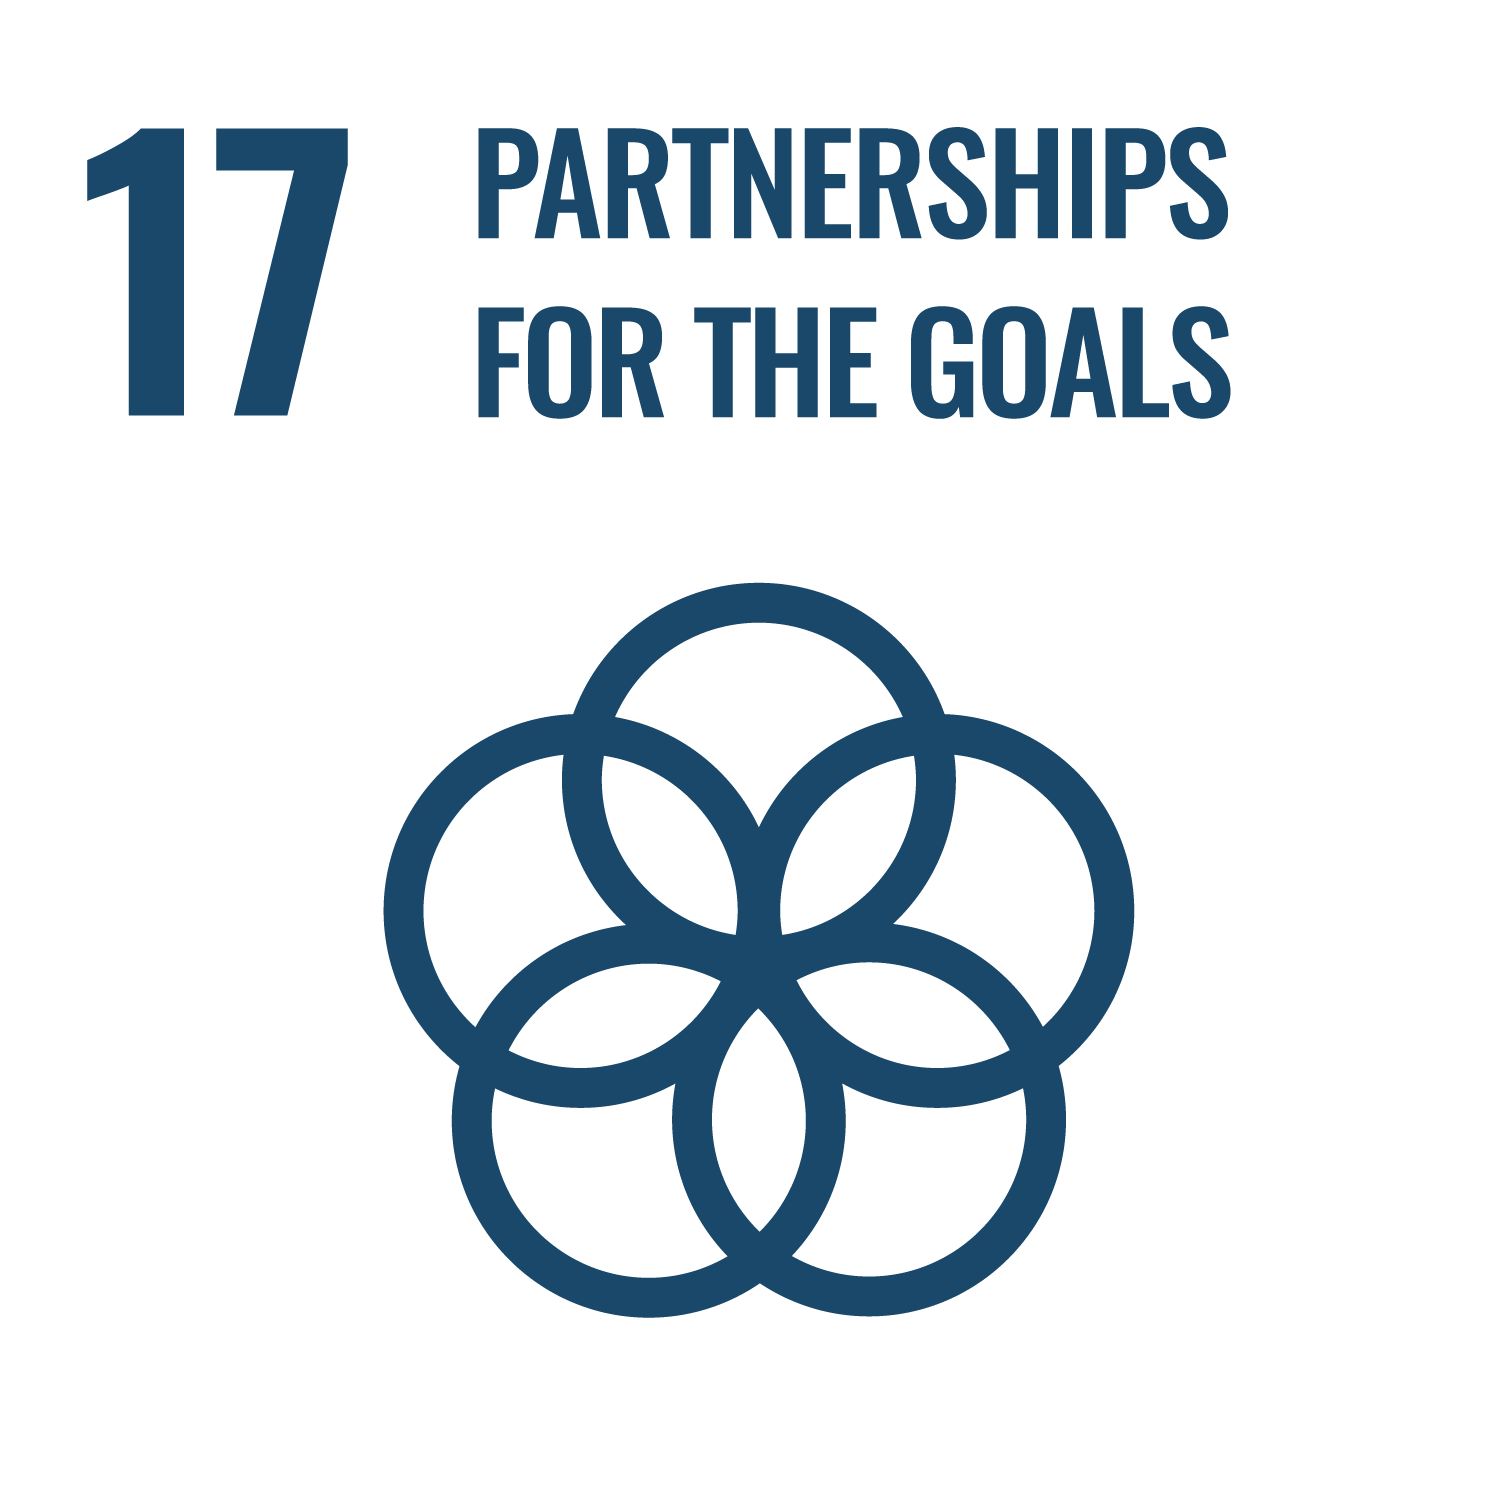 Goal 17 - Partnerships for the goals